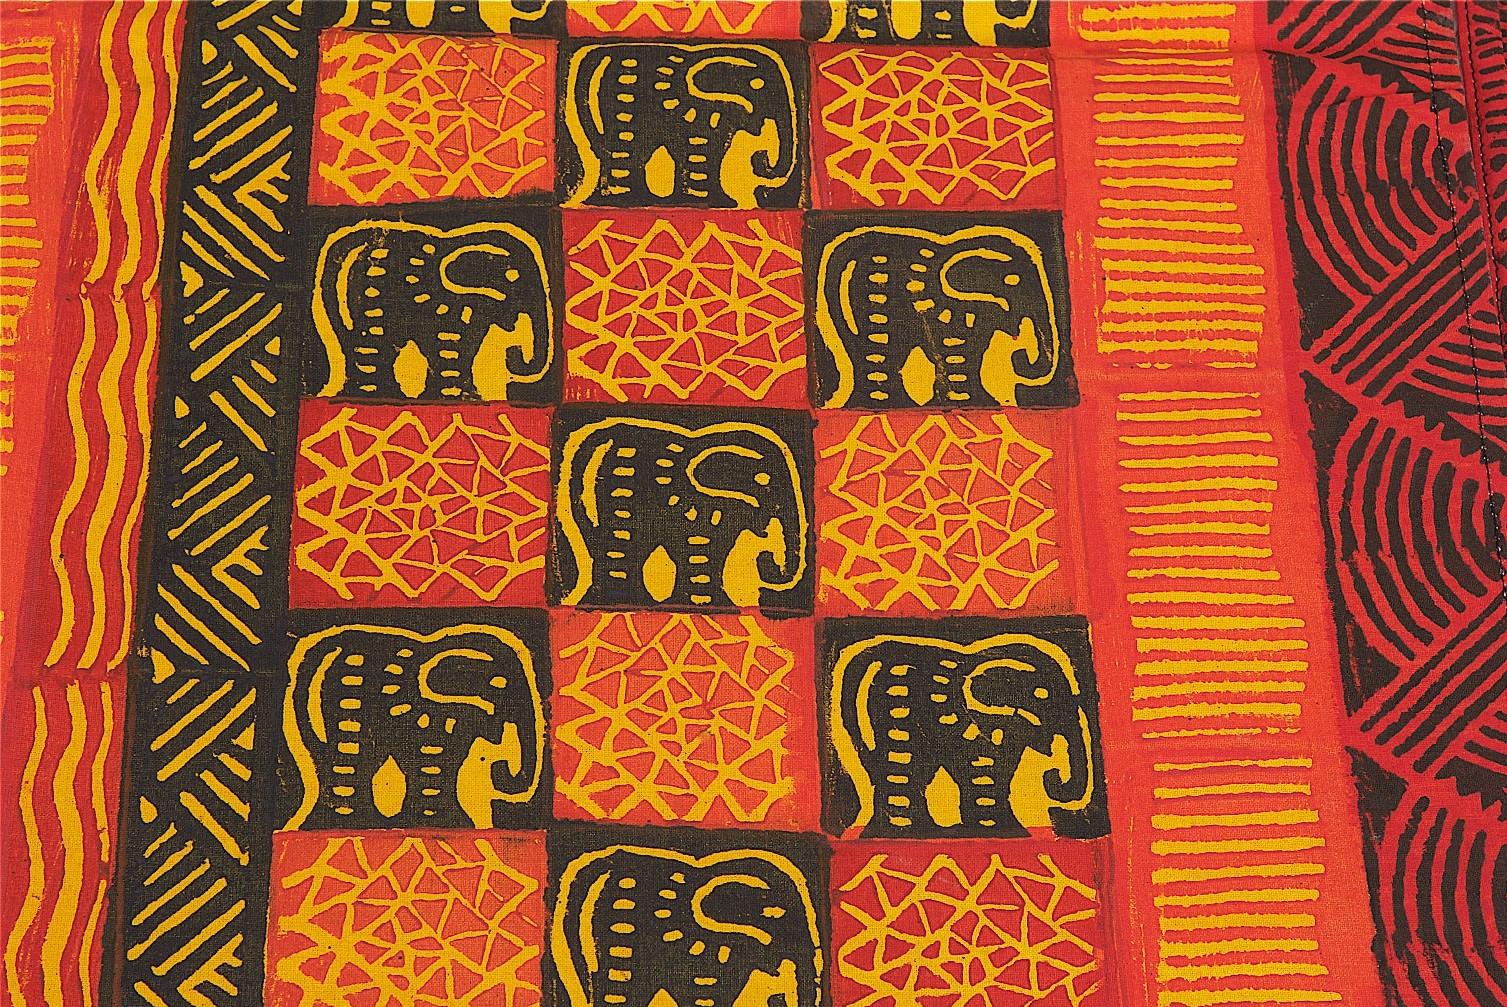 Orange Elephant Tablecloth, handmade in Zimbabwe